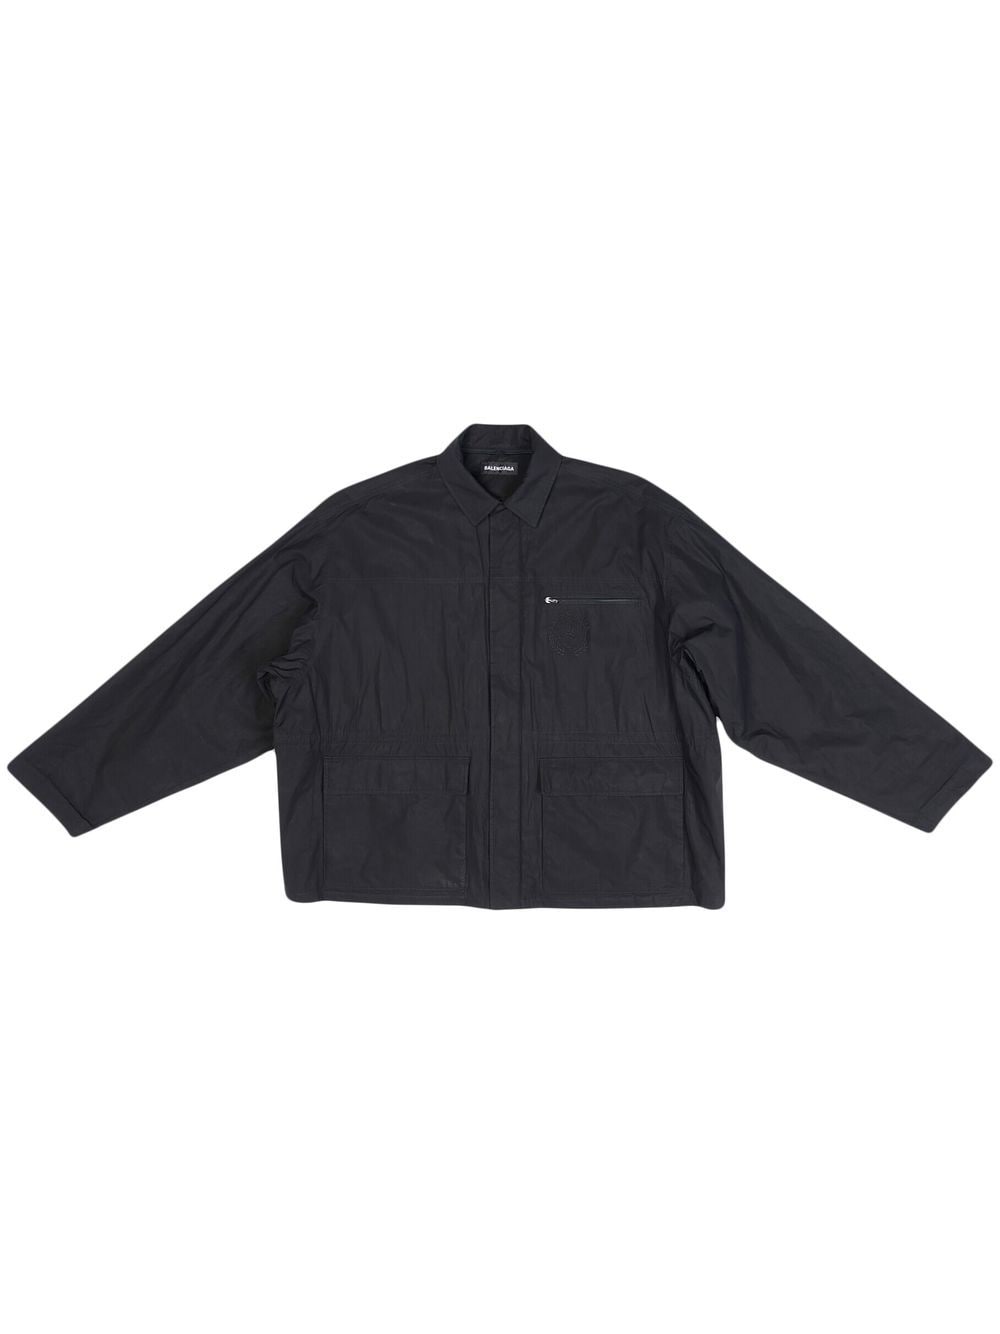 Balenciaga logo-embroidered shirt jacket - Black